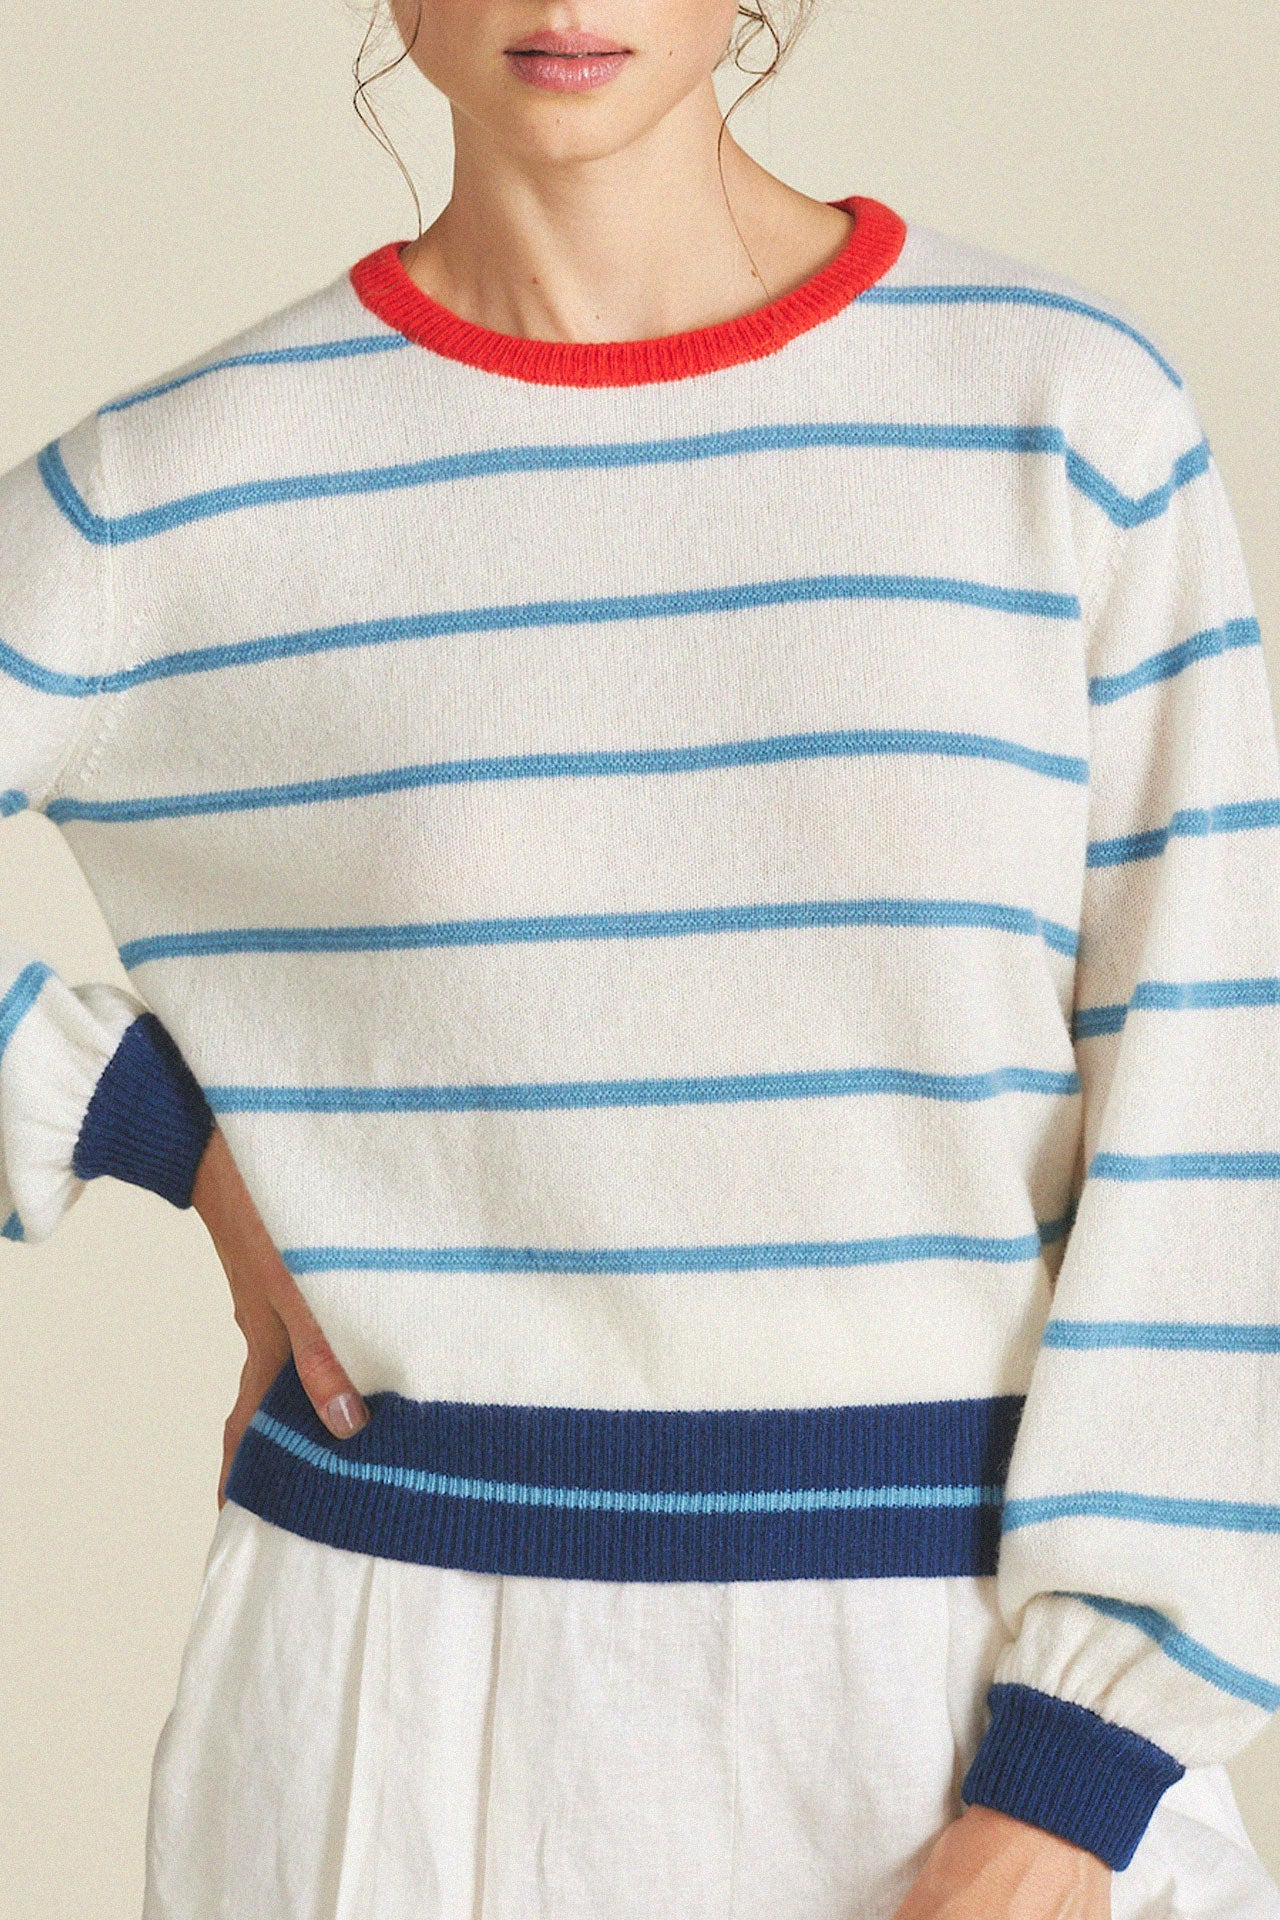 Ryann Sweater Antique White With Blue Stripe